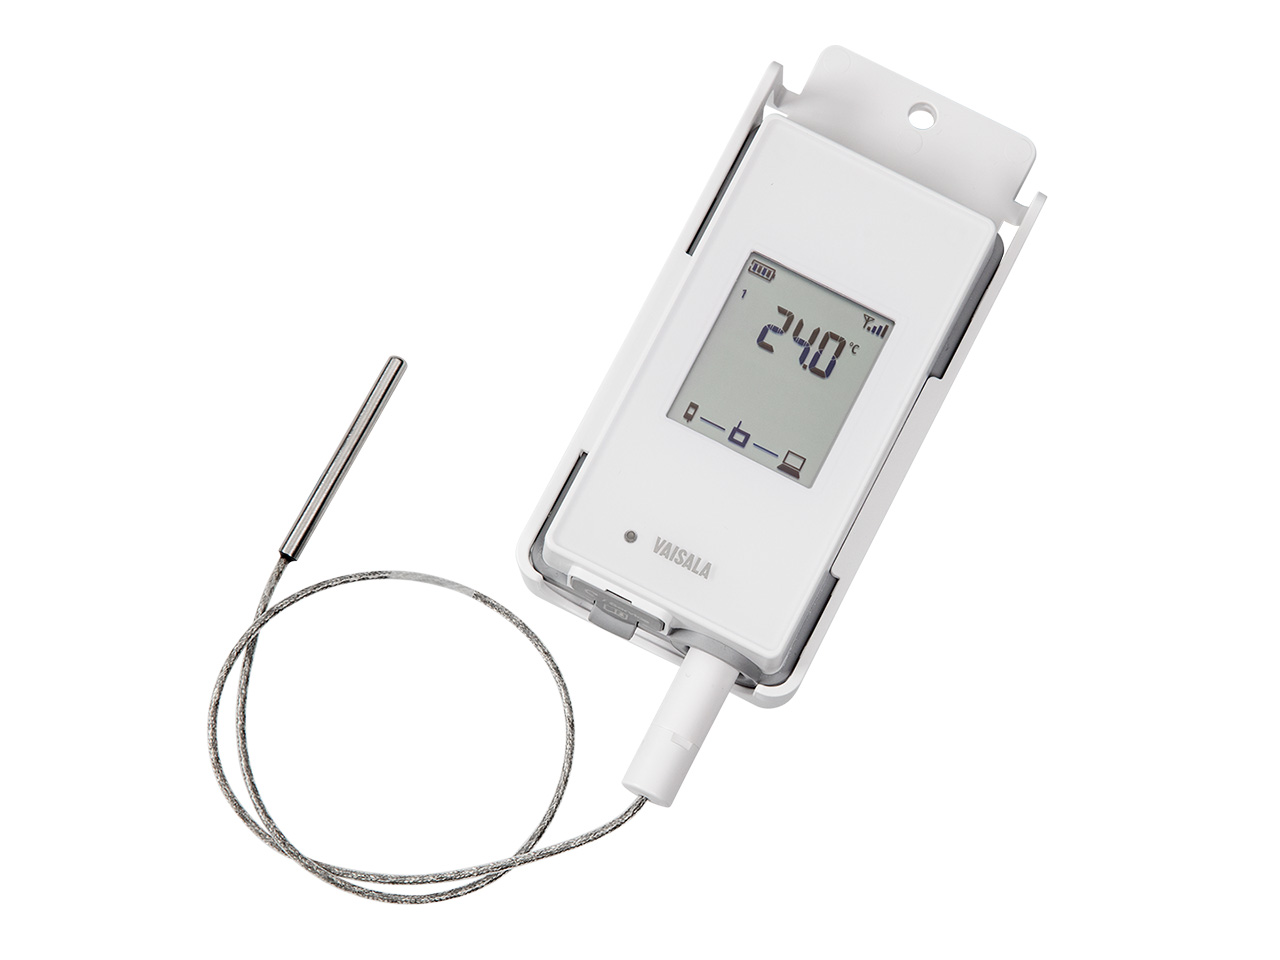 For Fridge and freezer monitoring wireless temperature sensor, 50 cm cable